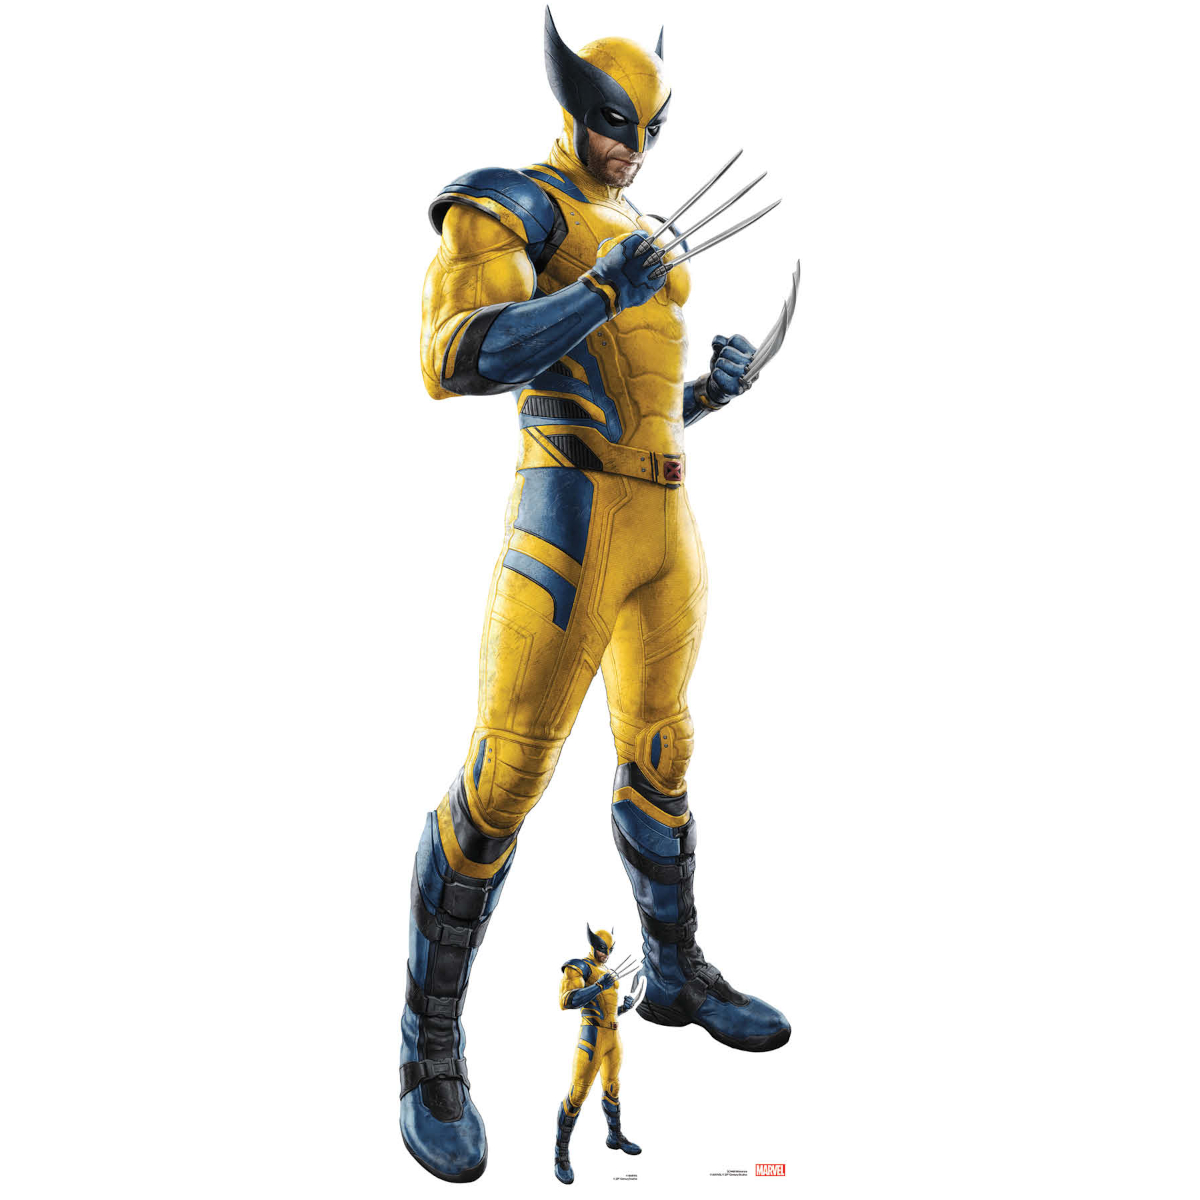 SC4468 Wolverine 'Hugh Jackman' (Deadpool & Wolverine) Official Lifesize + Mini Cardboard Cutout Standee Front